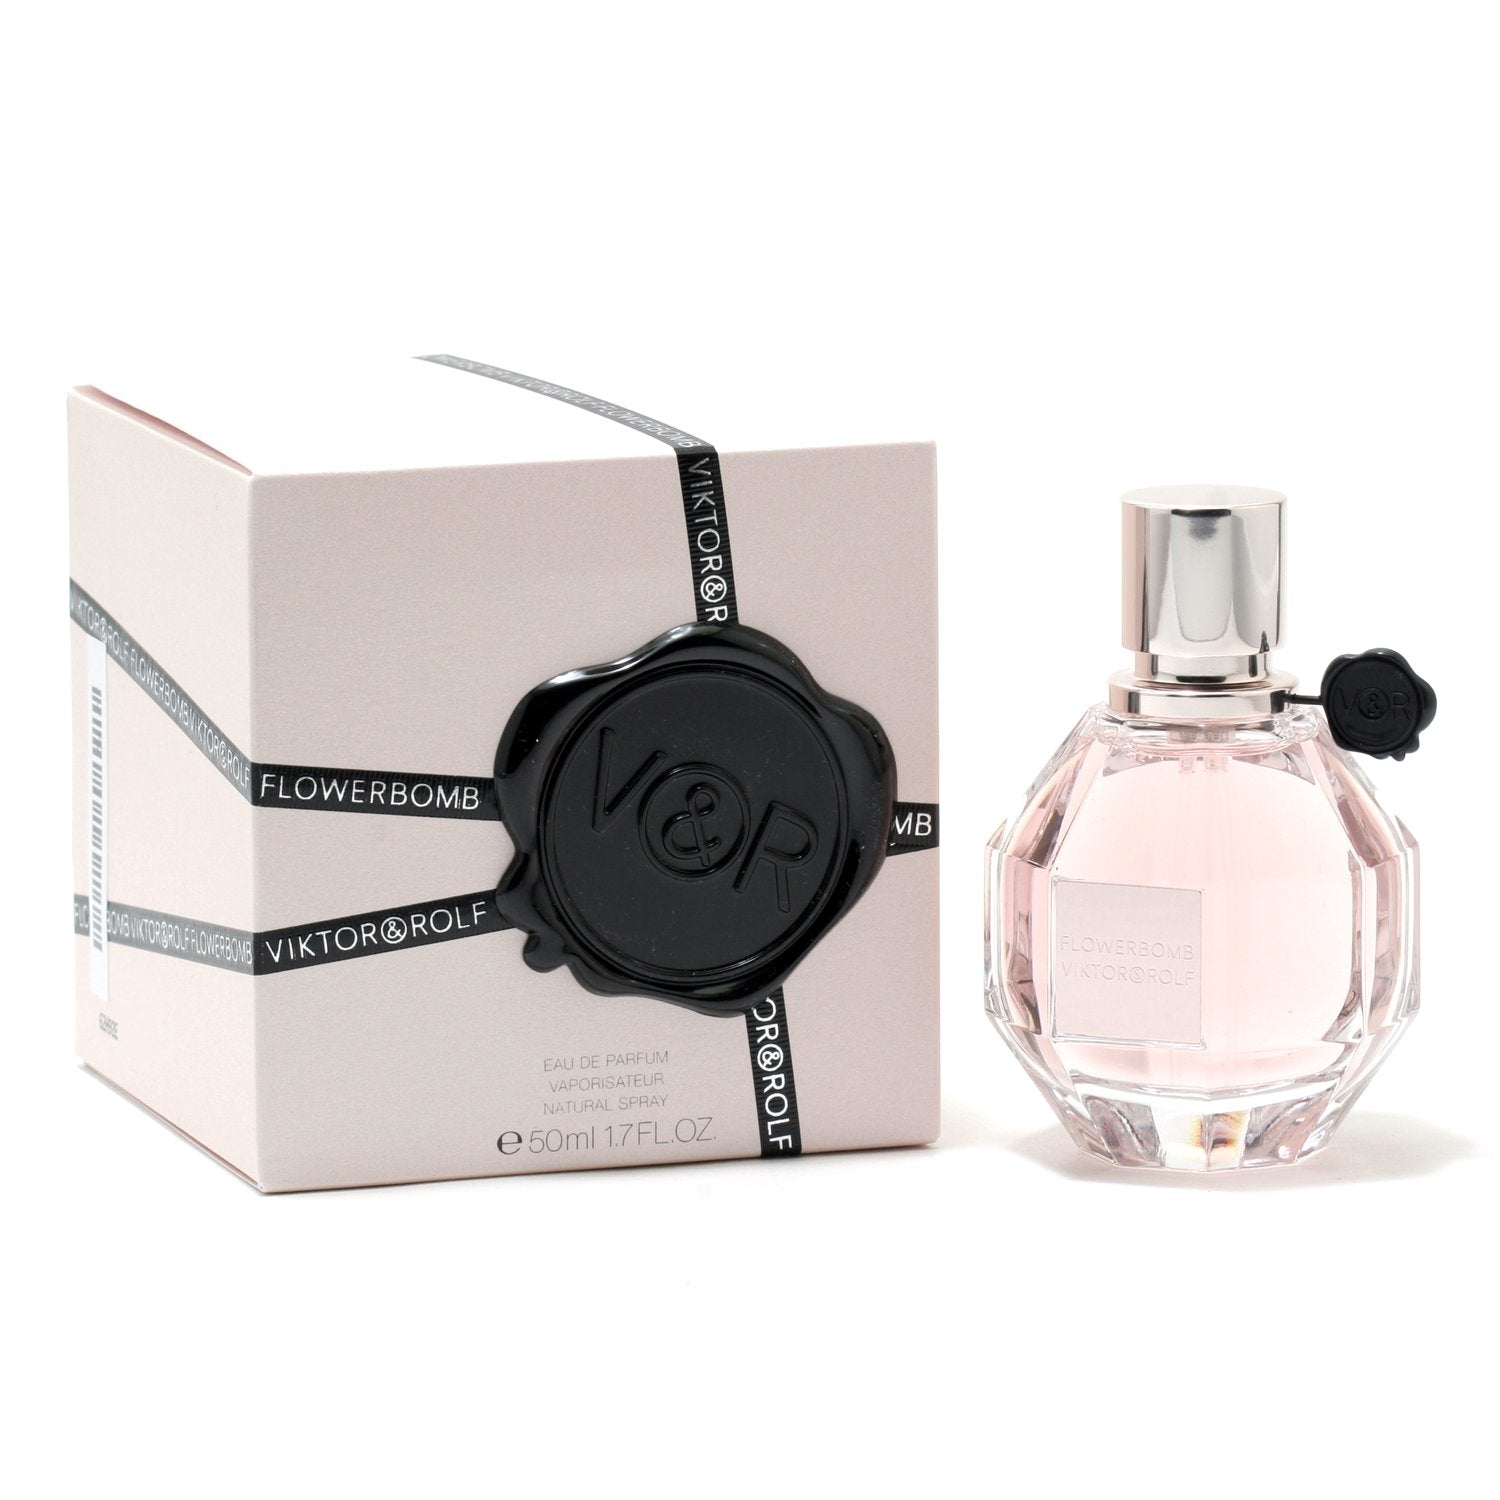 Perfume - FLOWERBOMB FOR WOMEN BY VIKTOR & ROLF - EAU DE PARFUM SPRAY